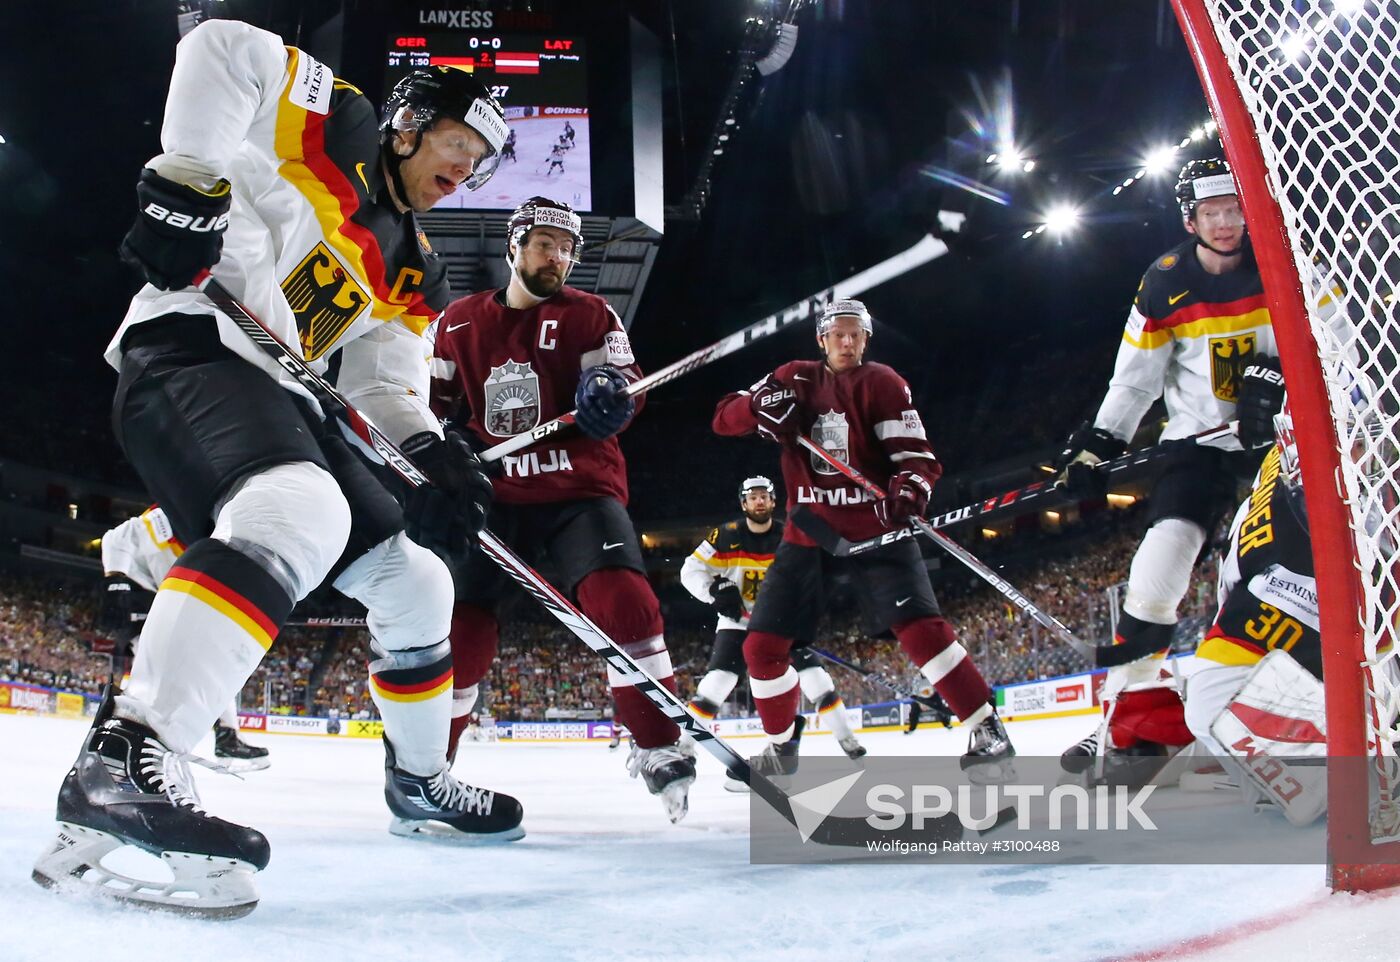 2017 IIHF World Championships. Germany vs. Latvia